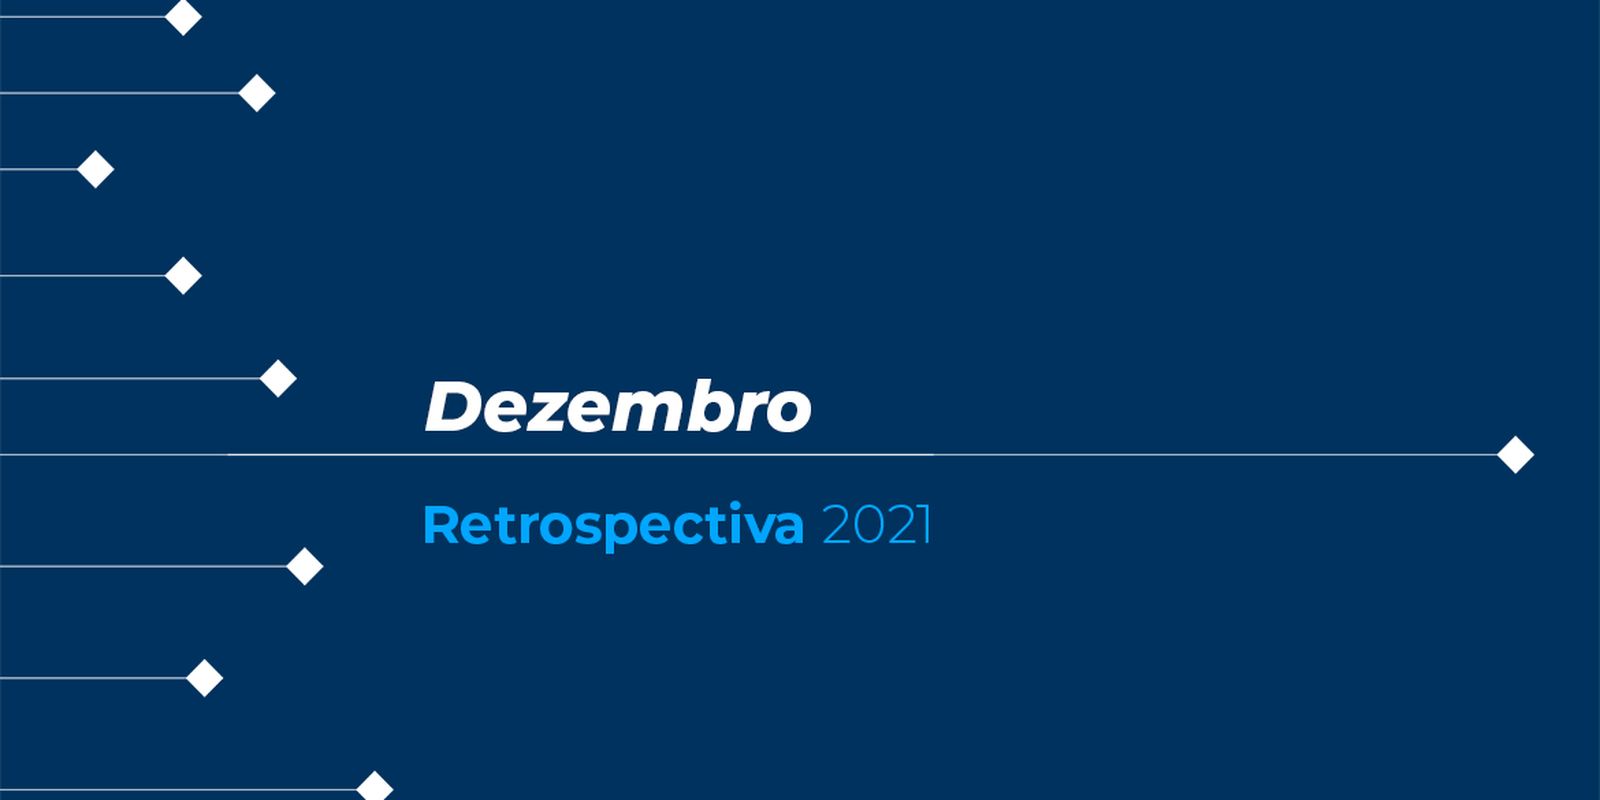 Championship: Retrospectiva 2021